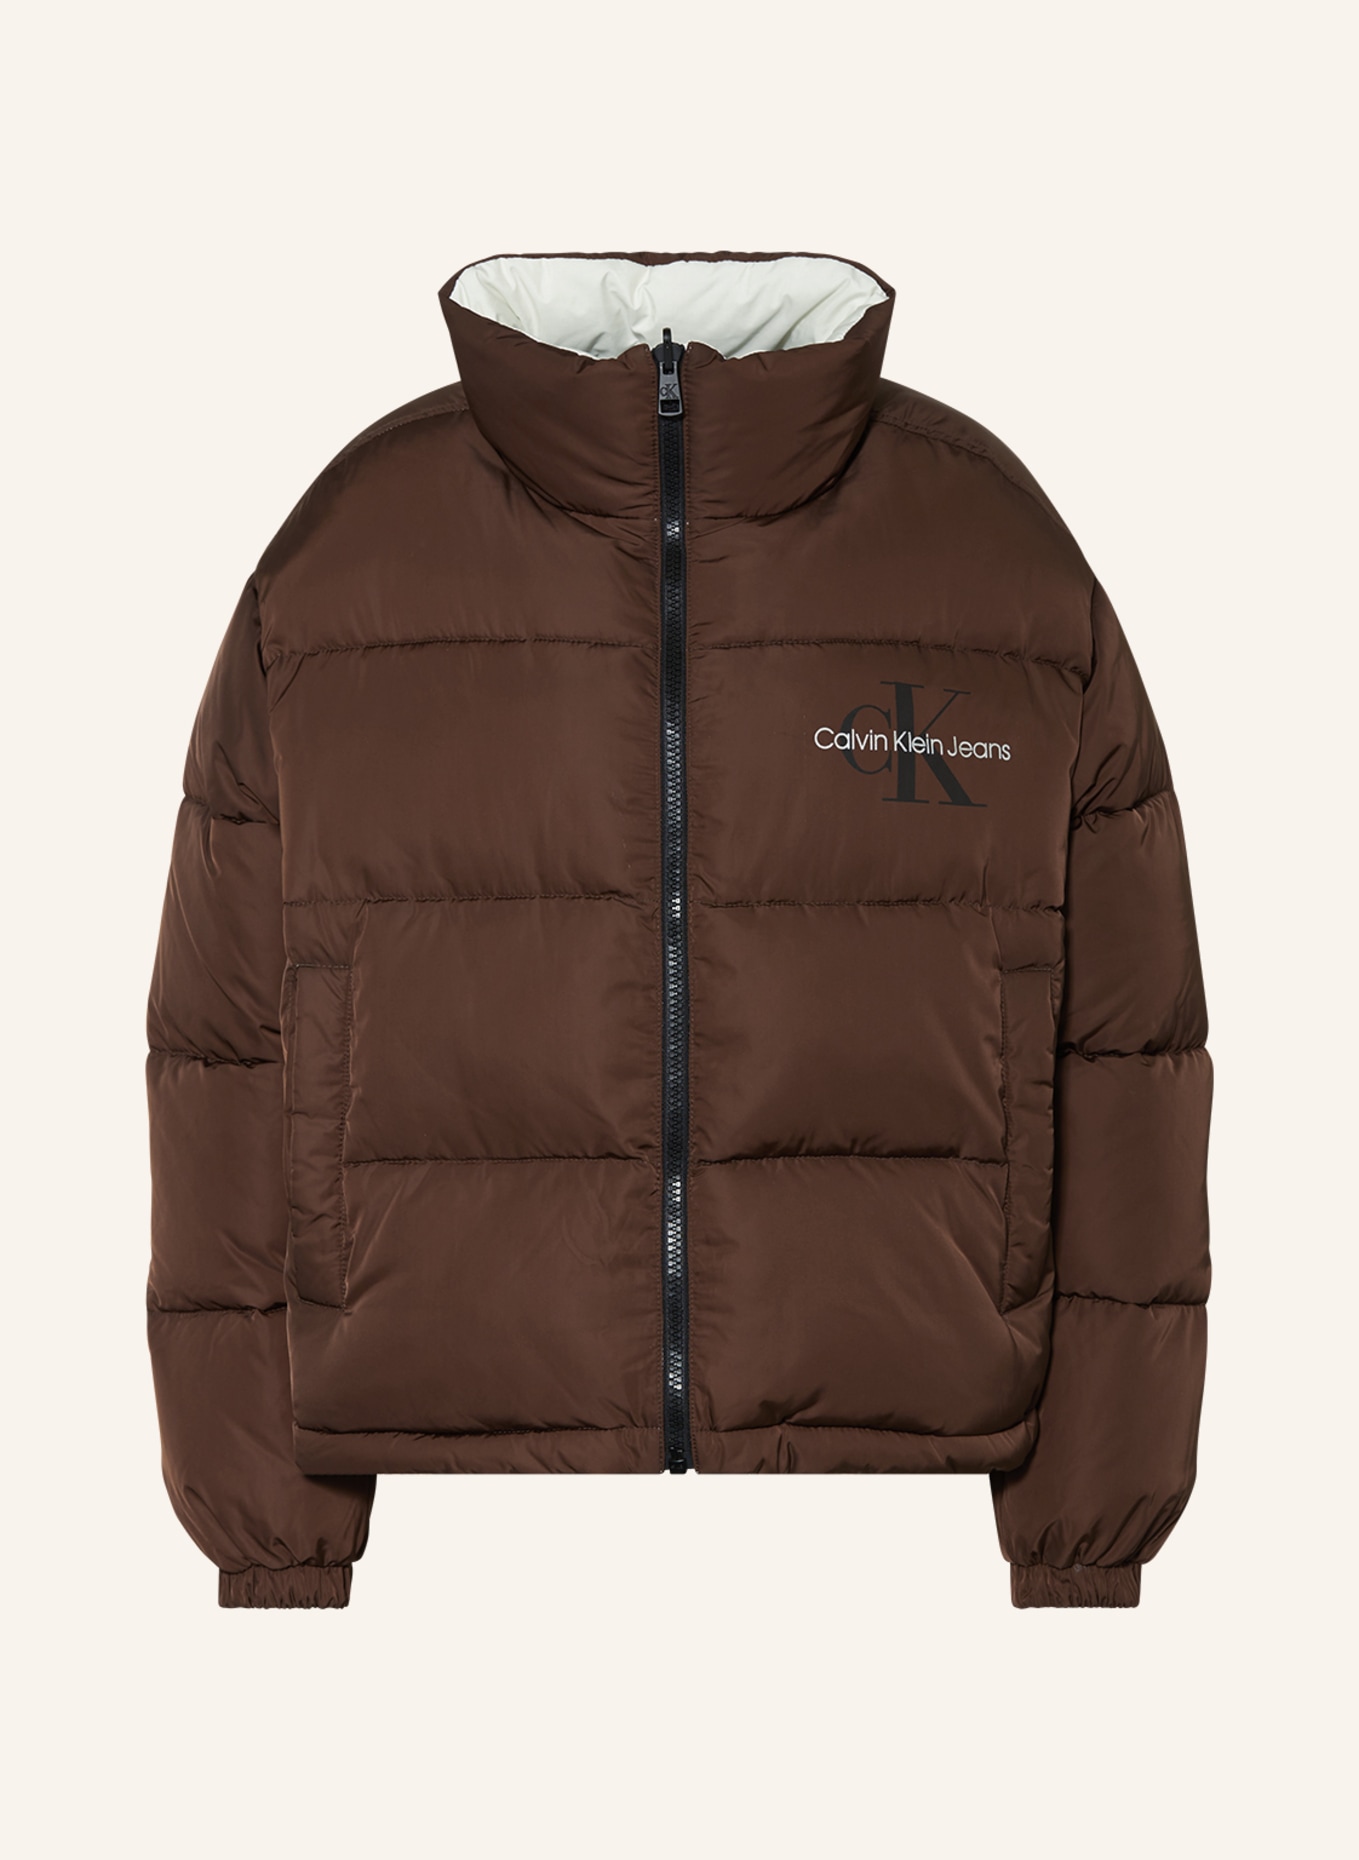 Calvin Klein Jeans Reversible quilted jacket in dark brown